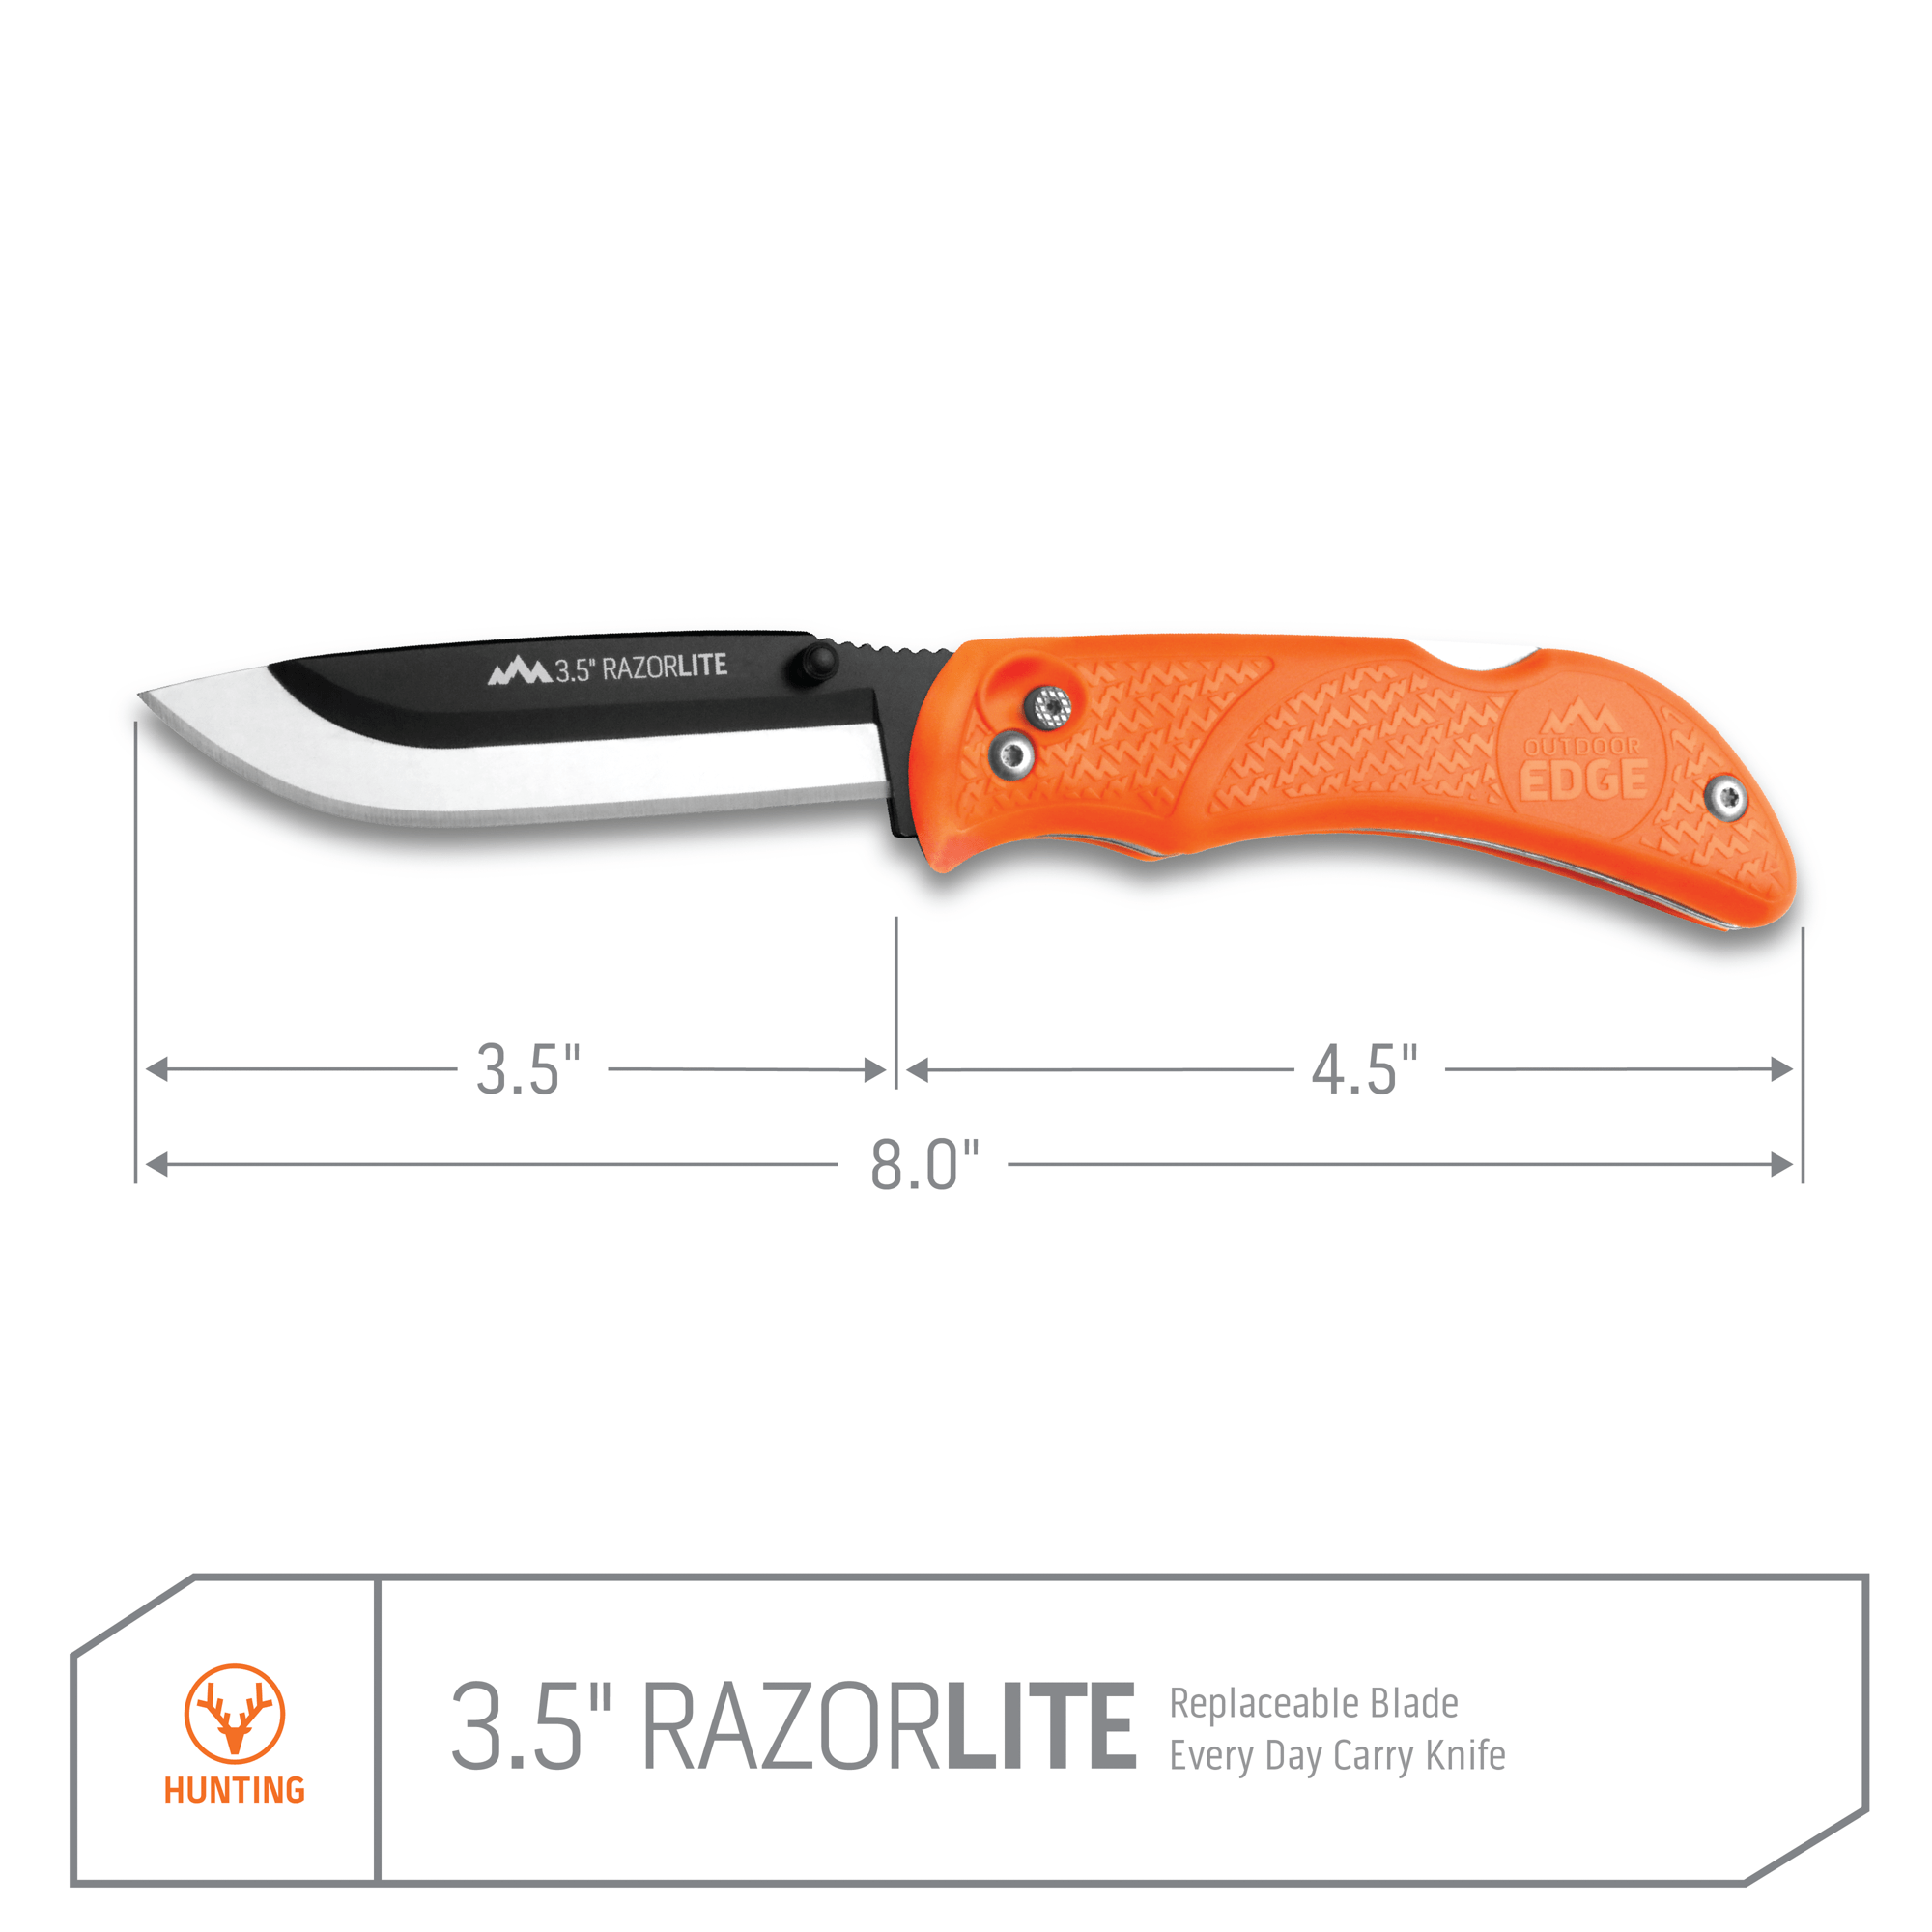 Outdoor Edge Orange RazorLite Razor Blade Knife Product Photo showing blade length and handle length